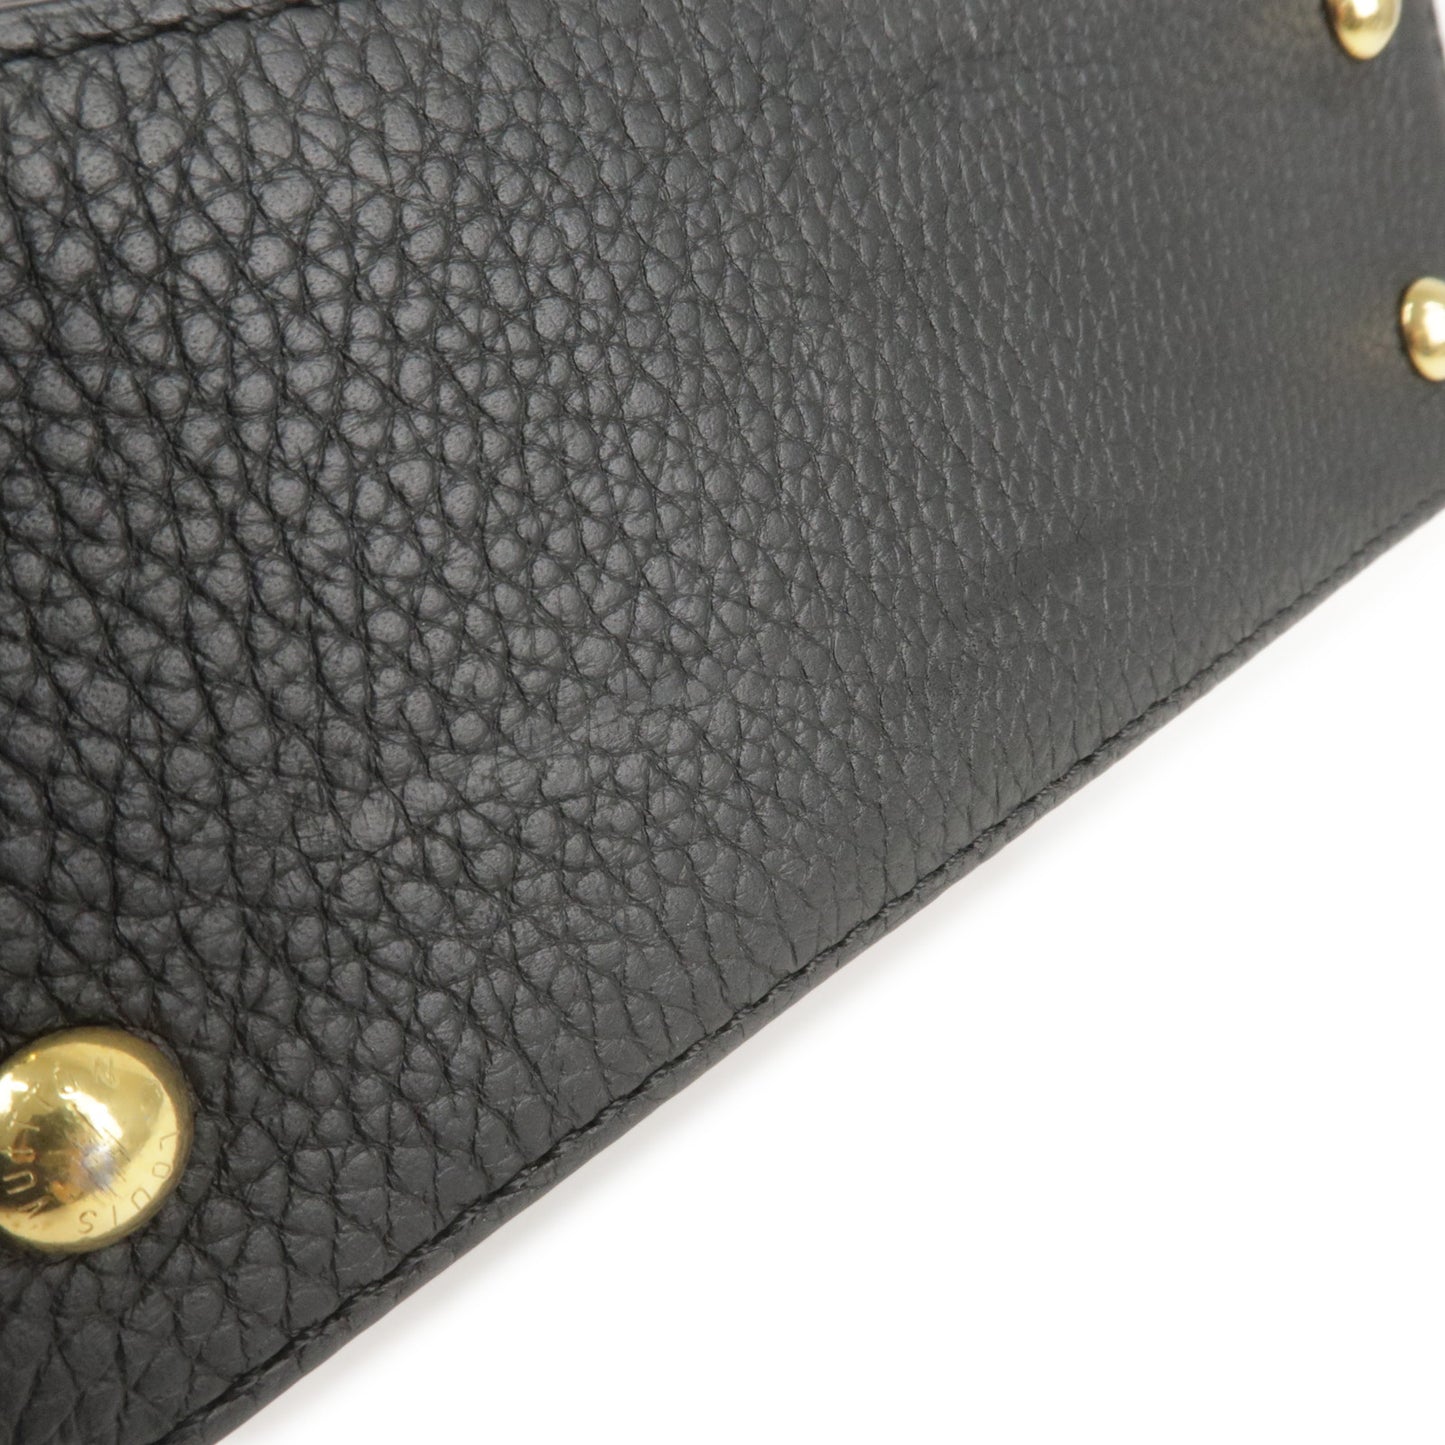 Louis Vuitton Capucines Mini 2Way Bag Hand Bag Black M56071